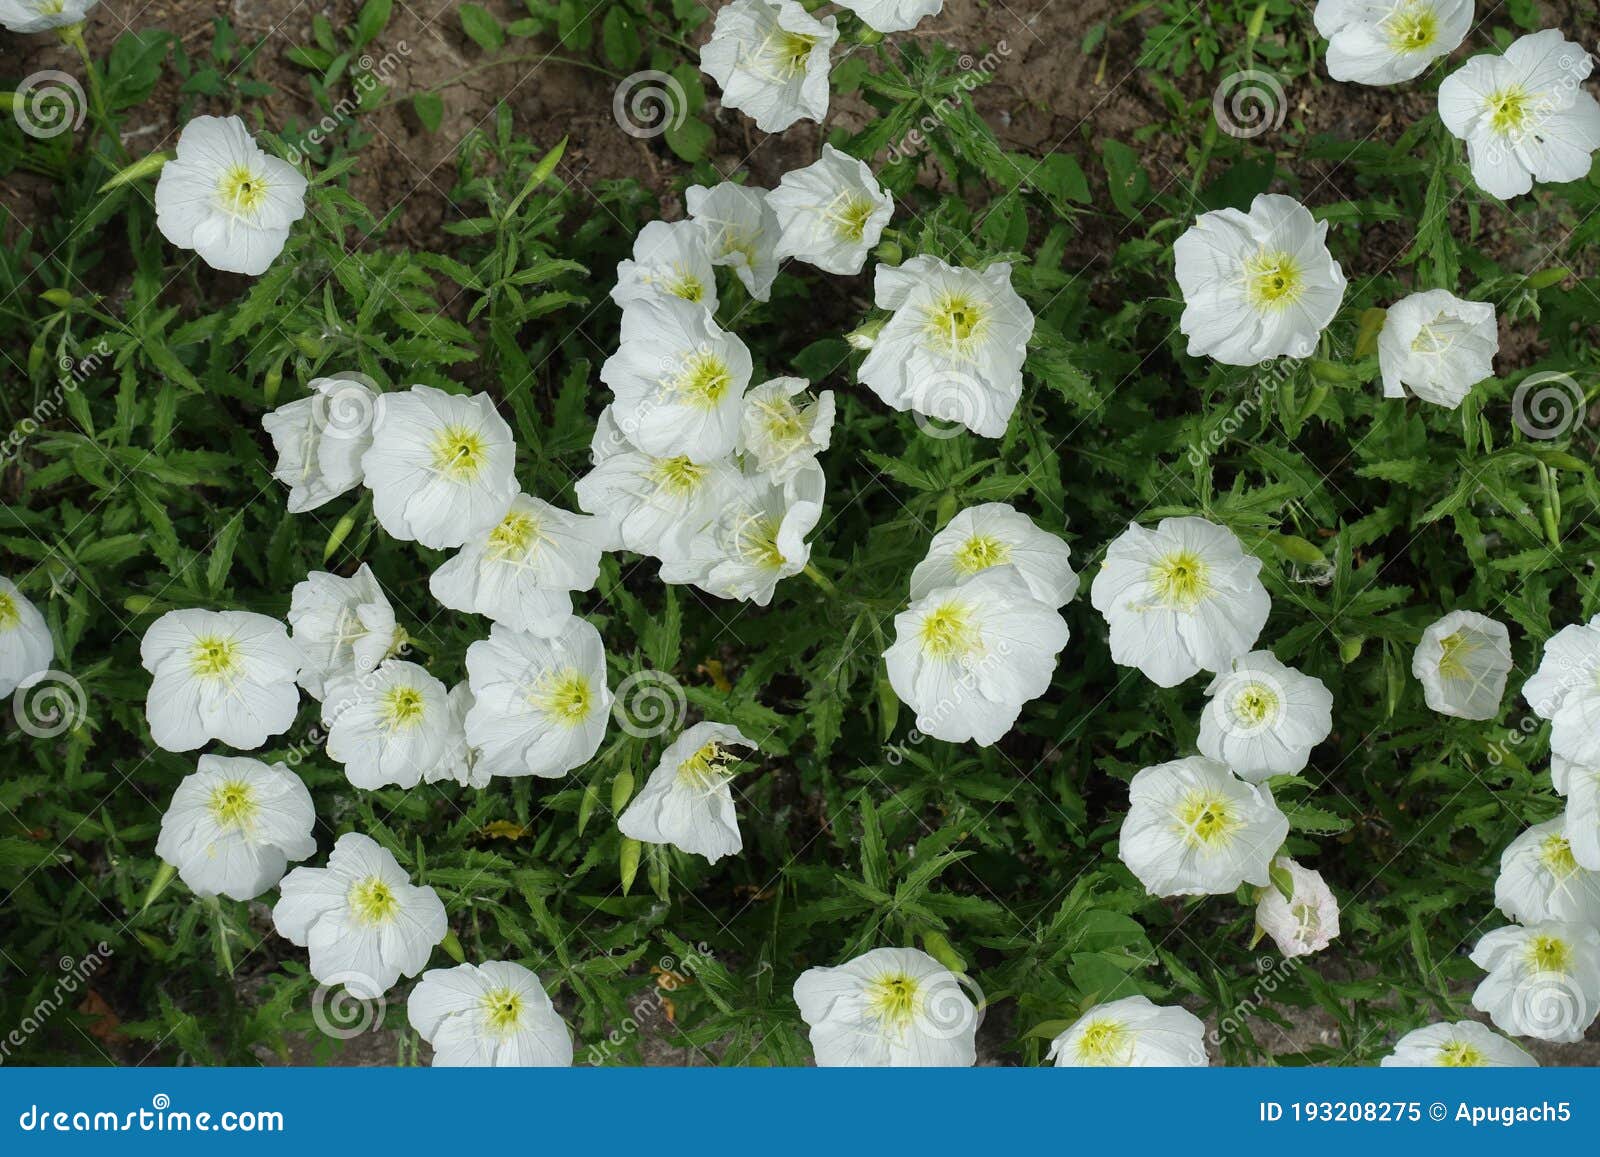 dozens of white flower of oenothera speciosa